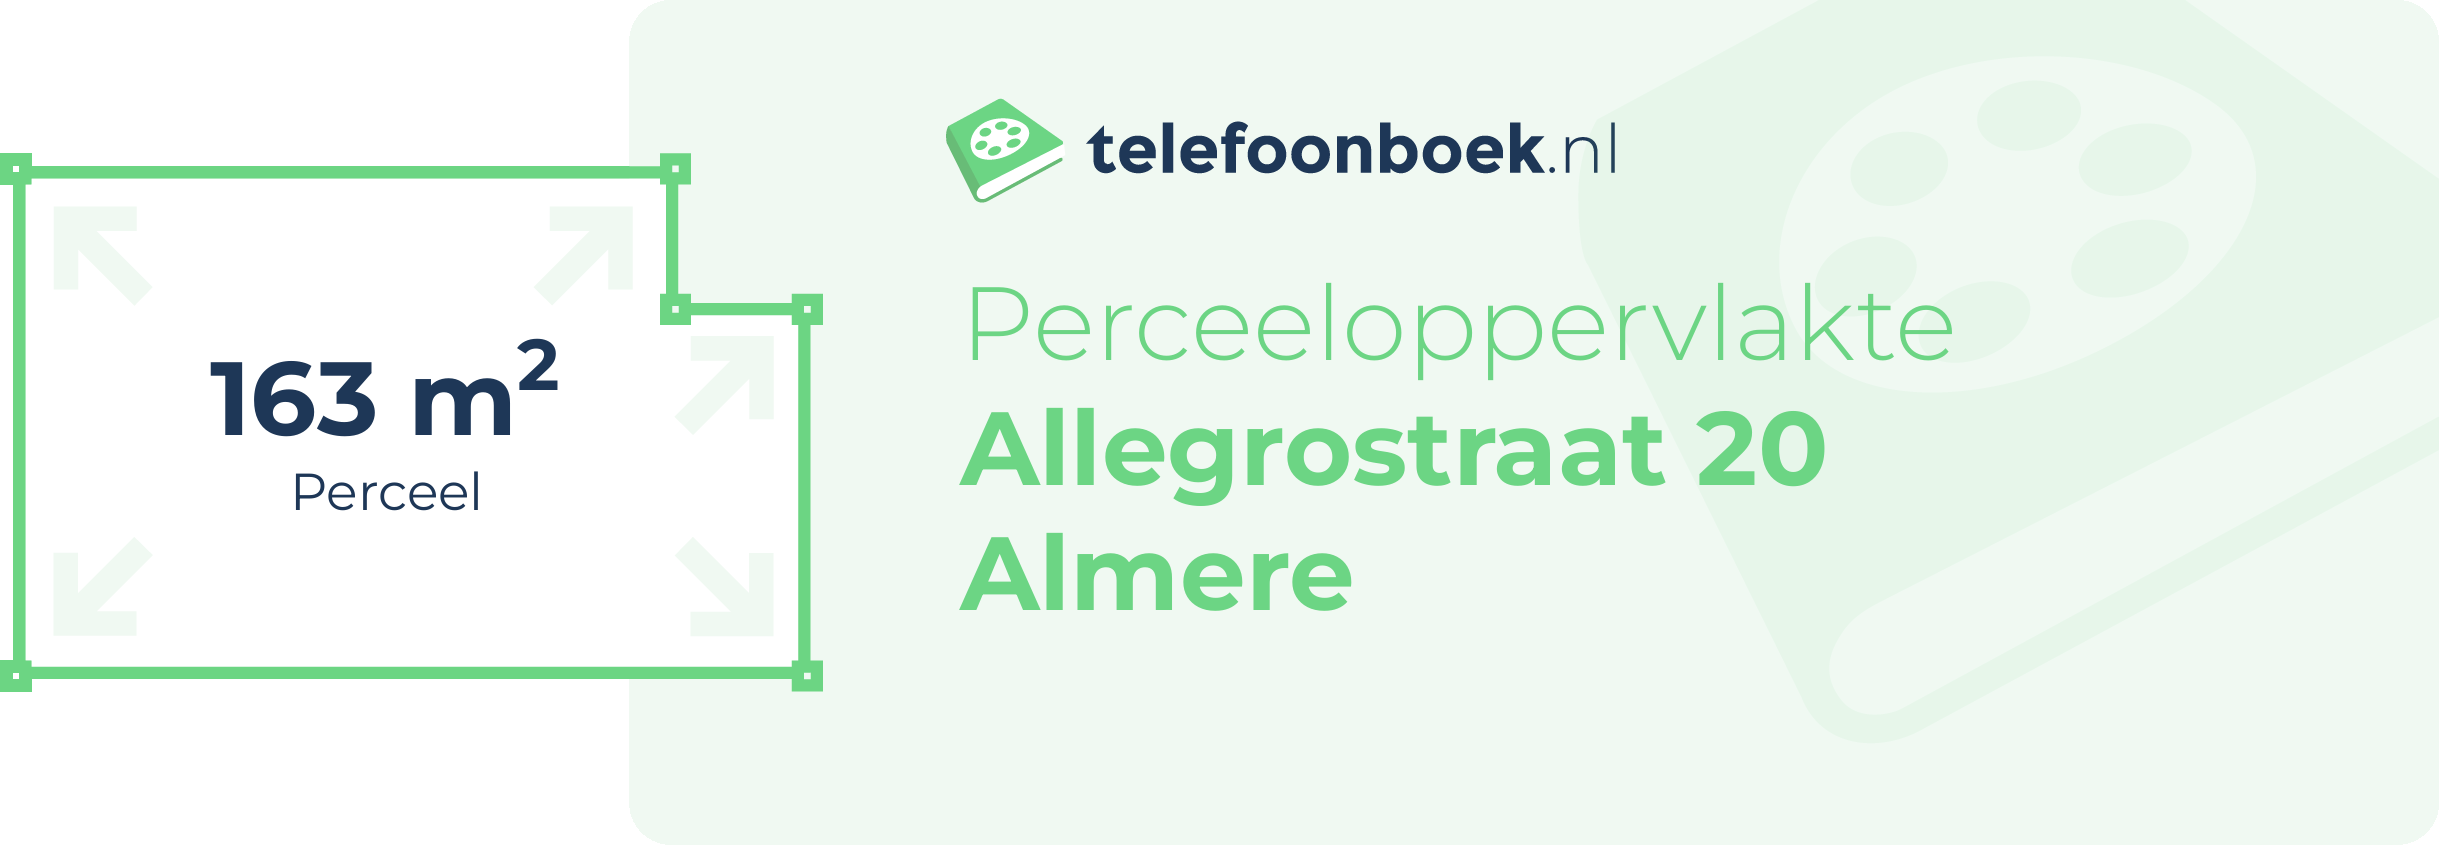 Perceeloppervlakte Allegrostraat 20 Almere